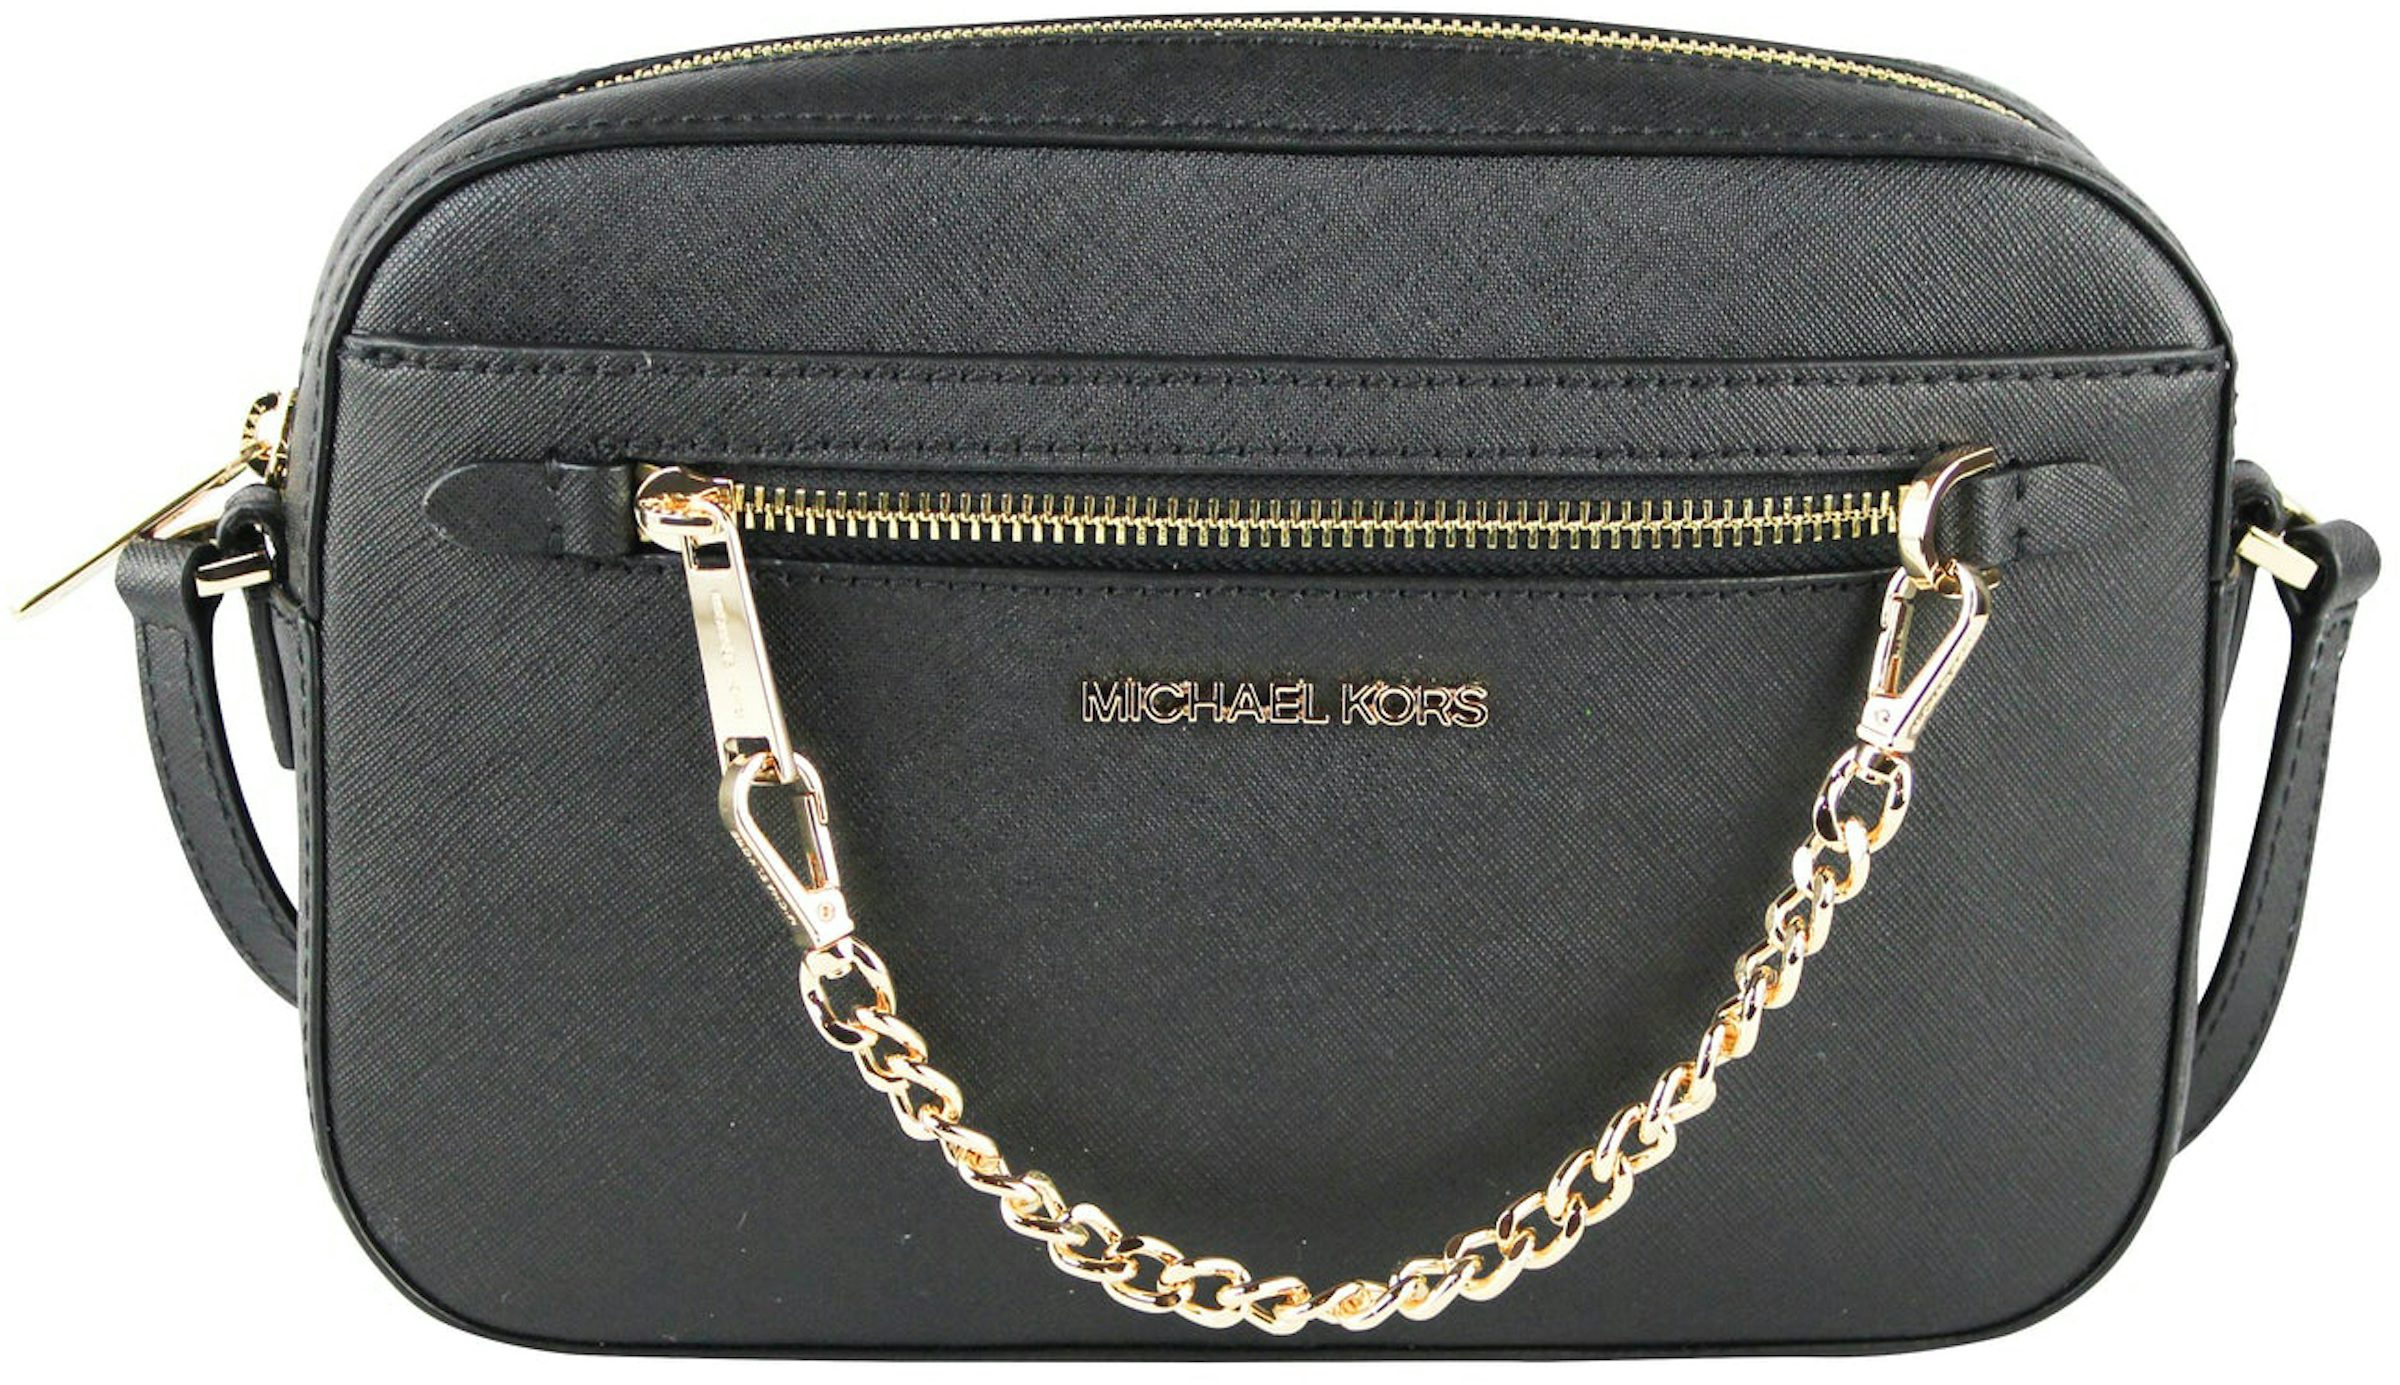 Michael Kors Jet Set Zip Chain Crossbody Bag Large Black/Gold in